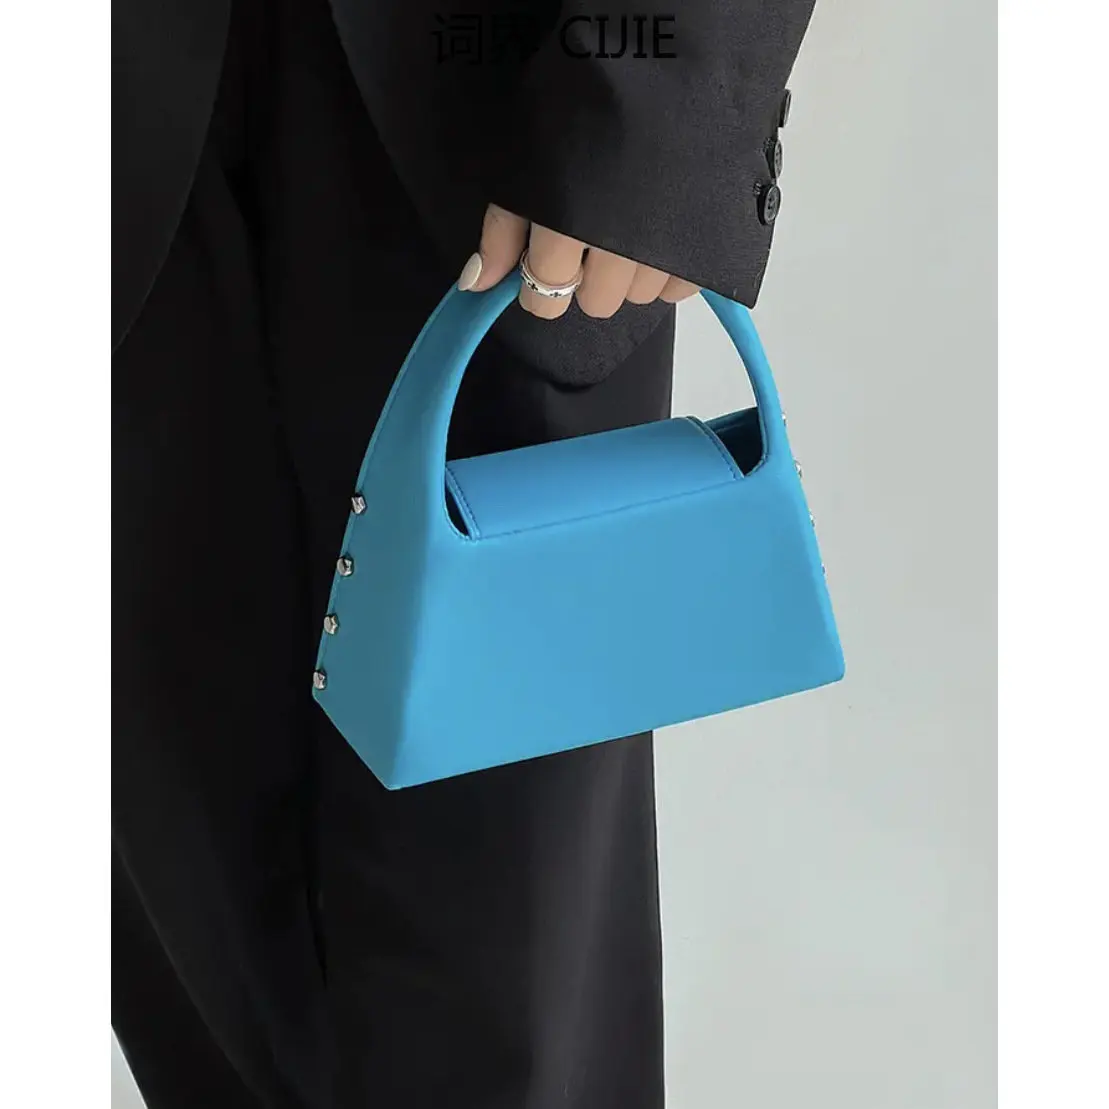 Cijie Chain Cigarette Case Bag for Women 2022 New Small Handbag Shoulder Messenger Bag